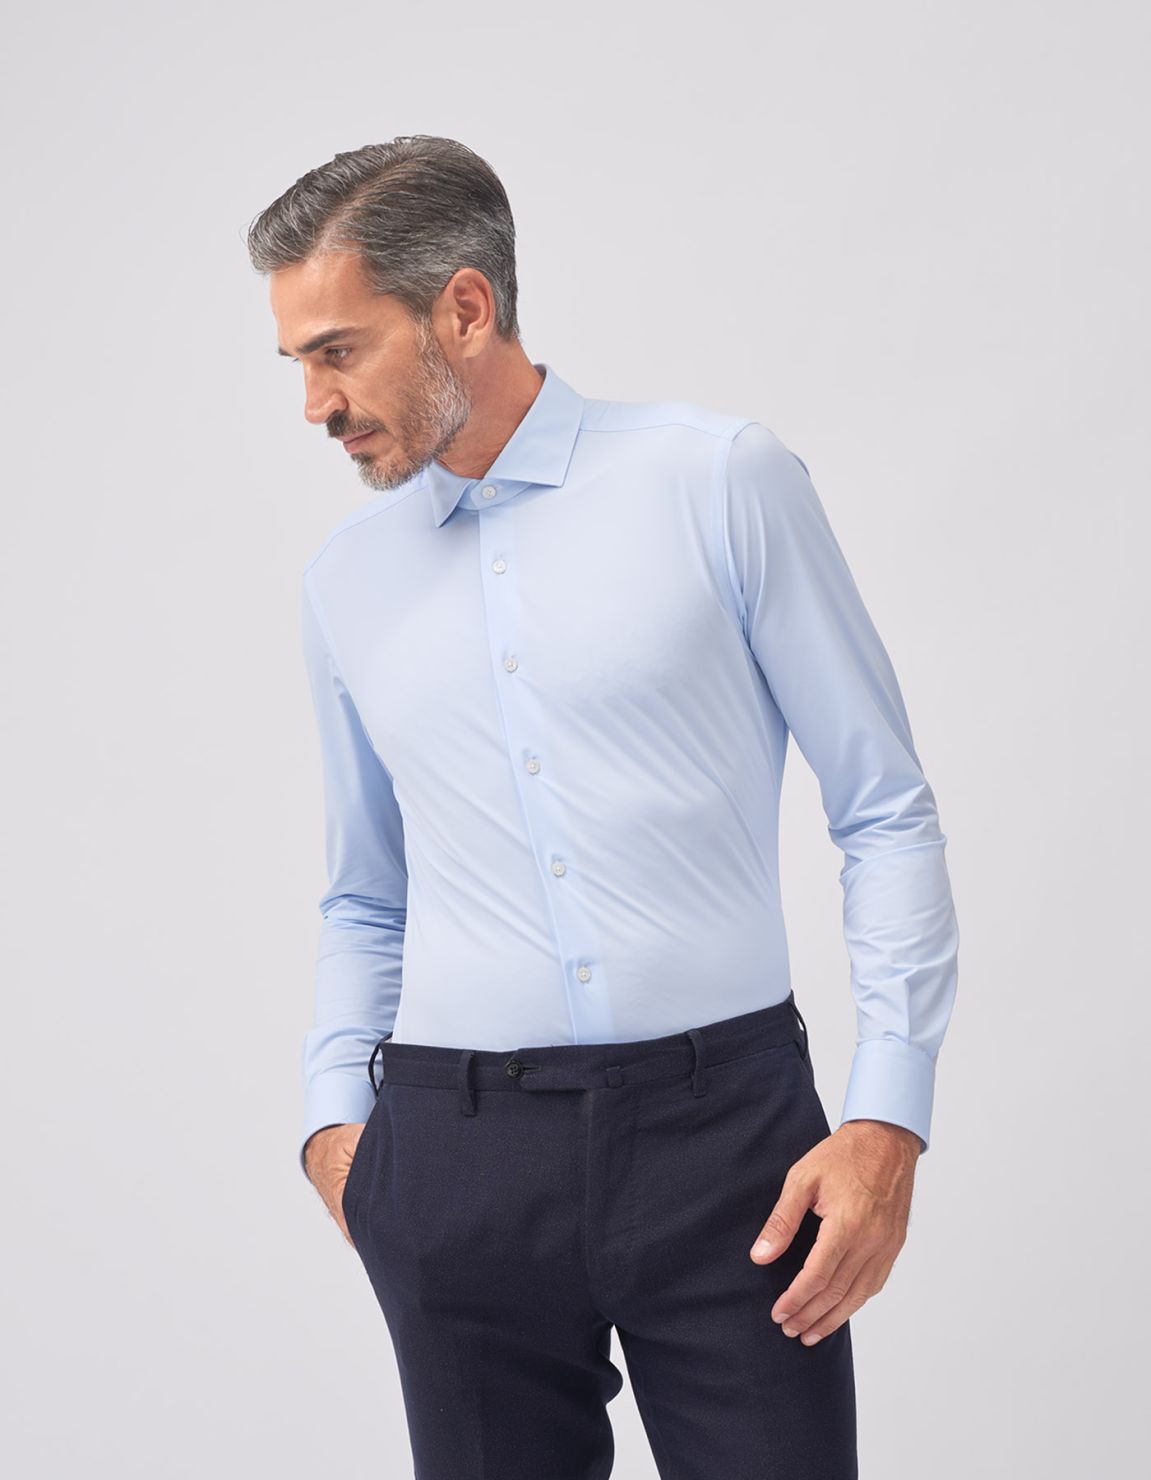 Shirt Collar small cutaway Light Blue Oxford Tailor Custom Fit 5